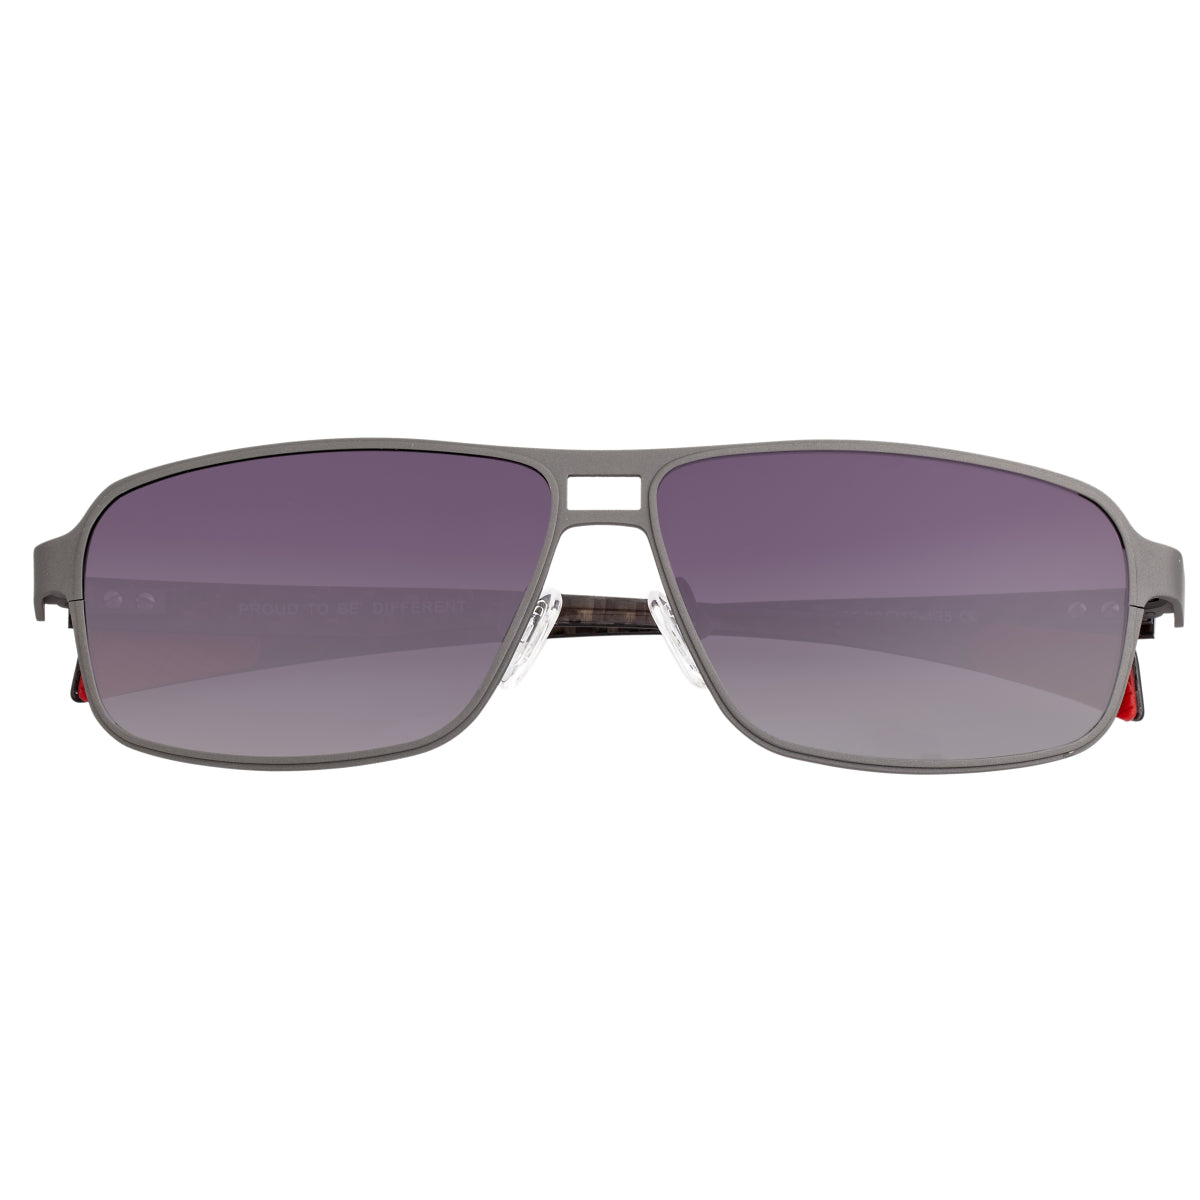 Breed Meridian Titanium and Carbon Fiber Polarized Sunglasses - Gunmetal/Black - BSG003GM